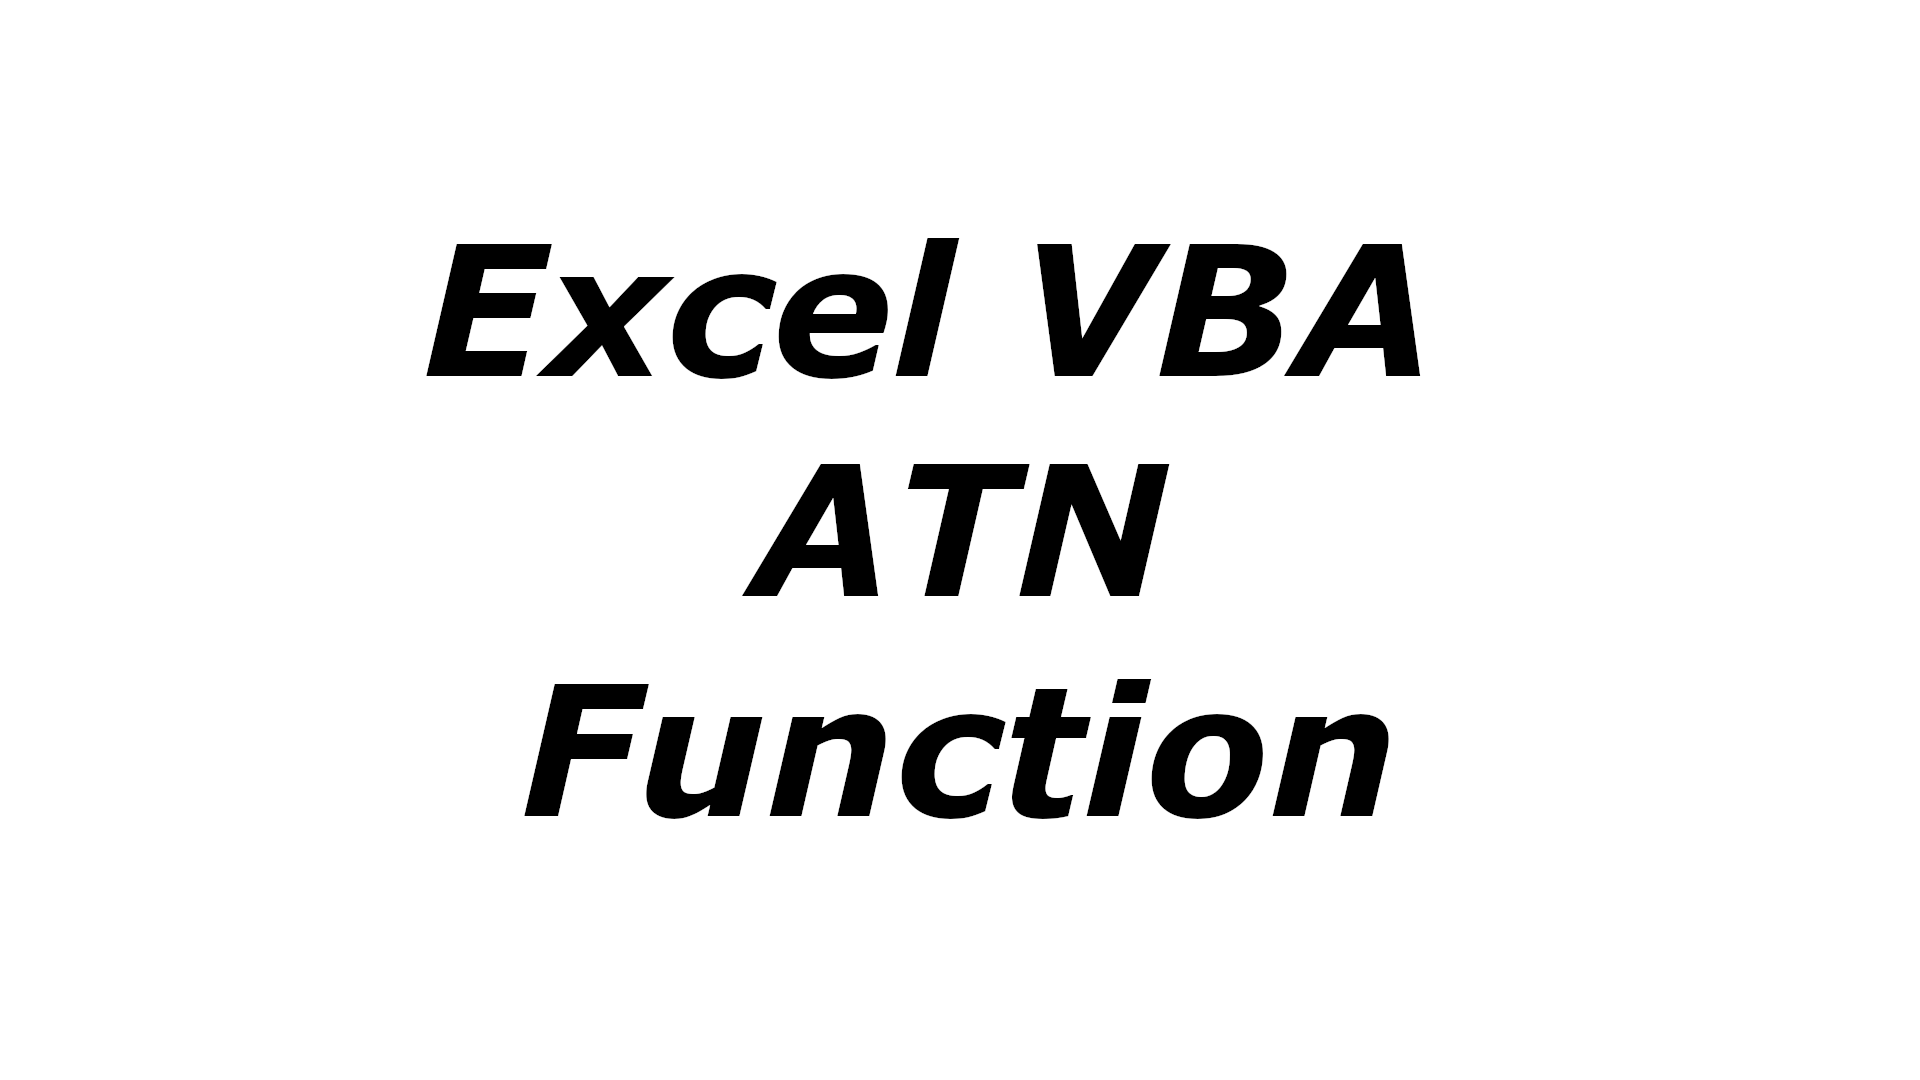 Excel VBA ATN function